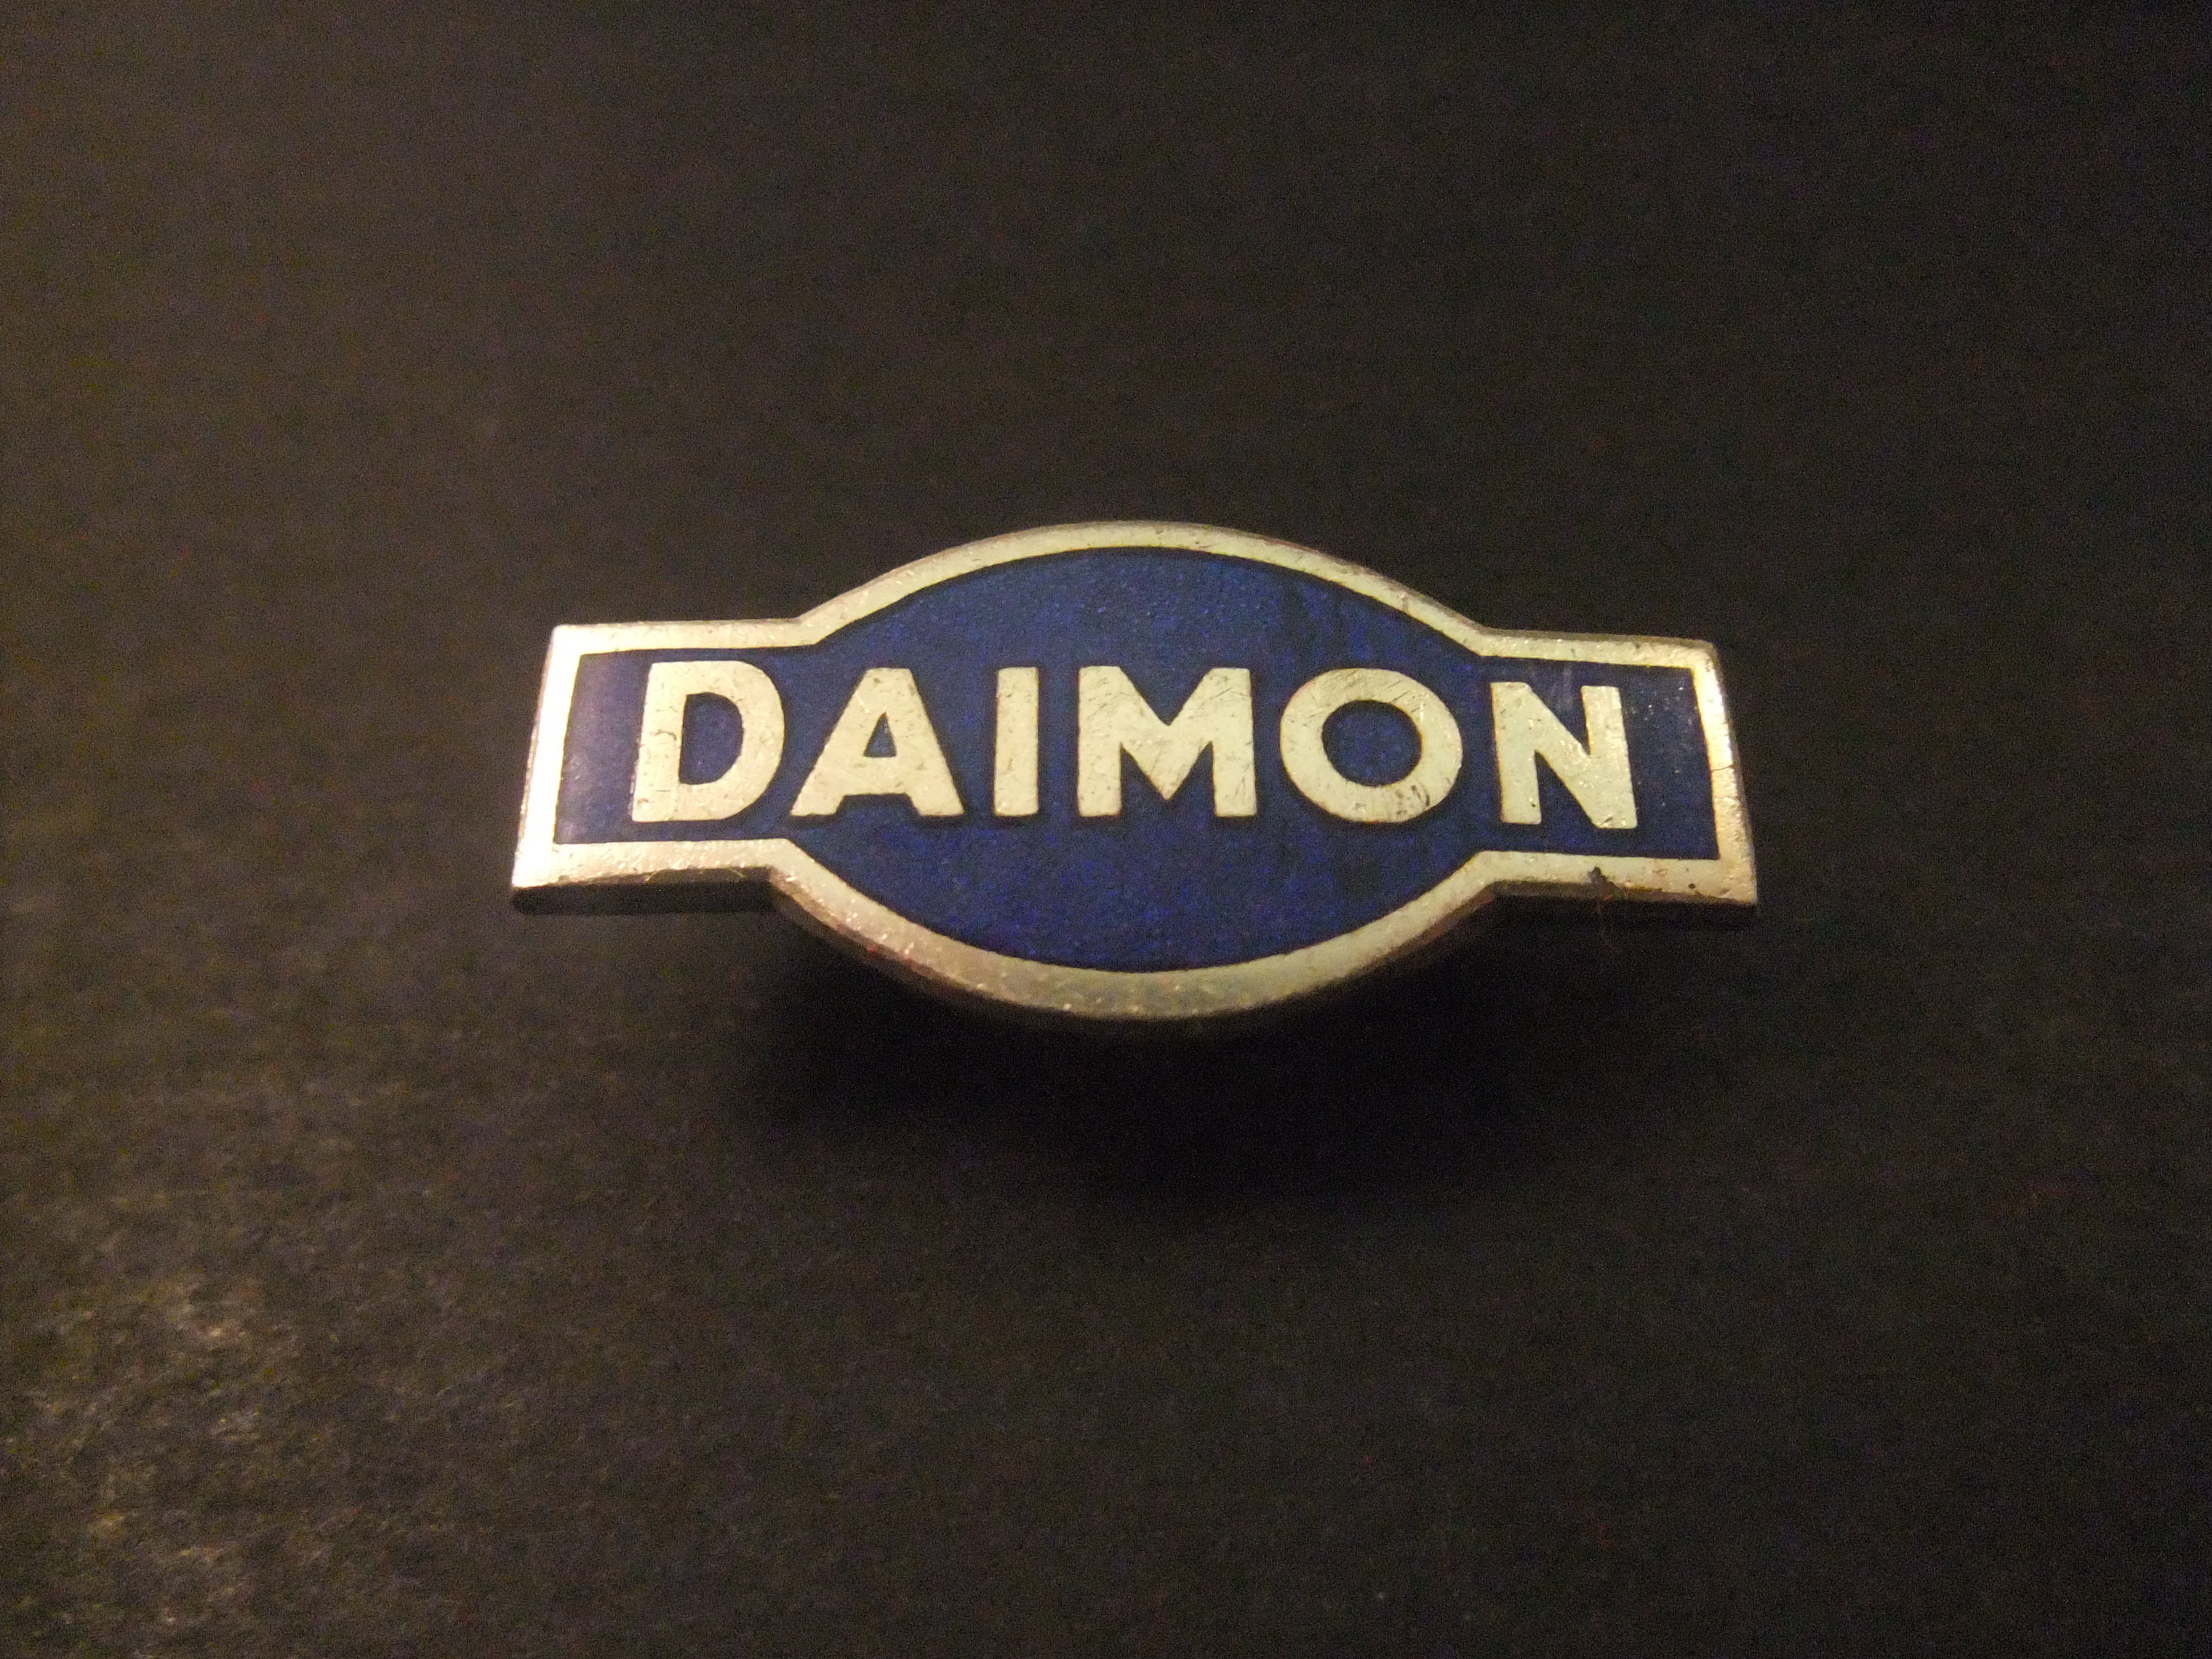 Daimon Duitse batterijfabrikant logo